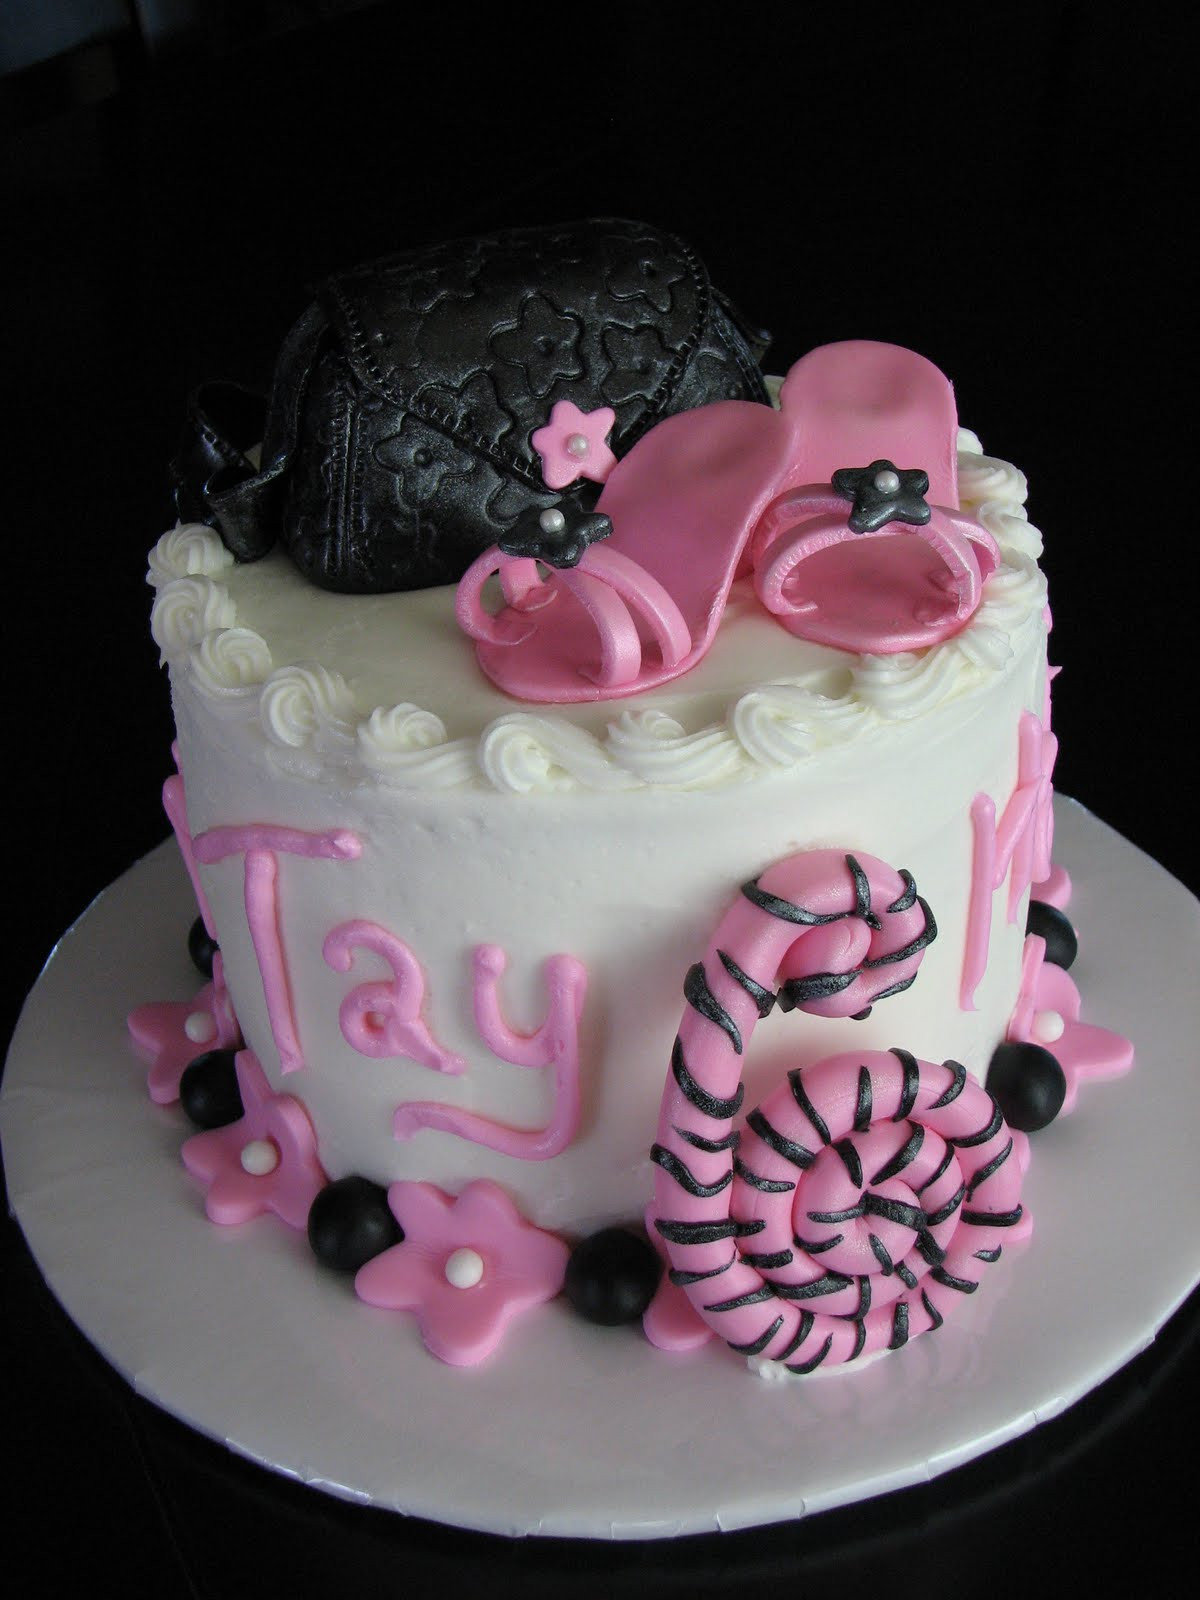 Diva Birthday Cakes
 Decadent Designs Pink and Black Diva Birthday Cake